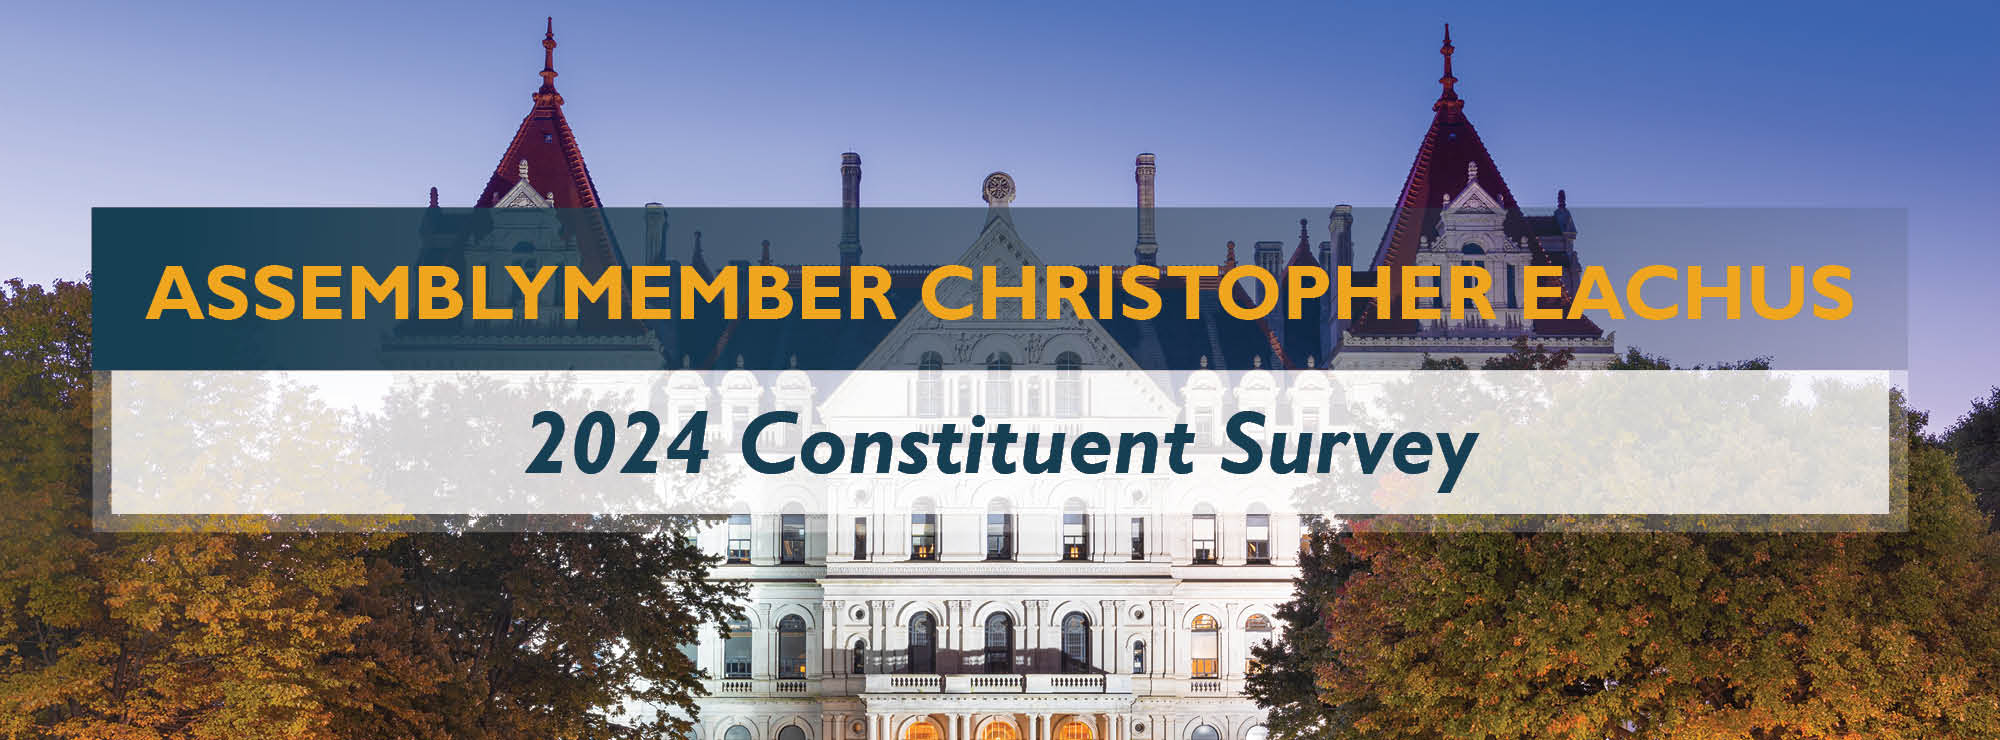 2024 Constituent Survey